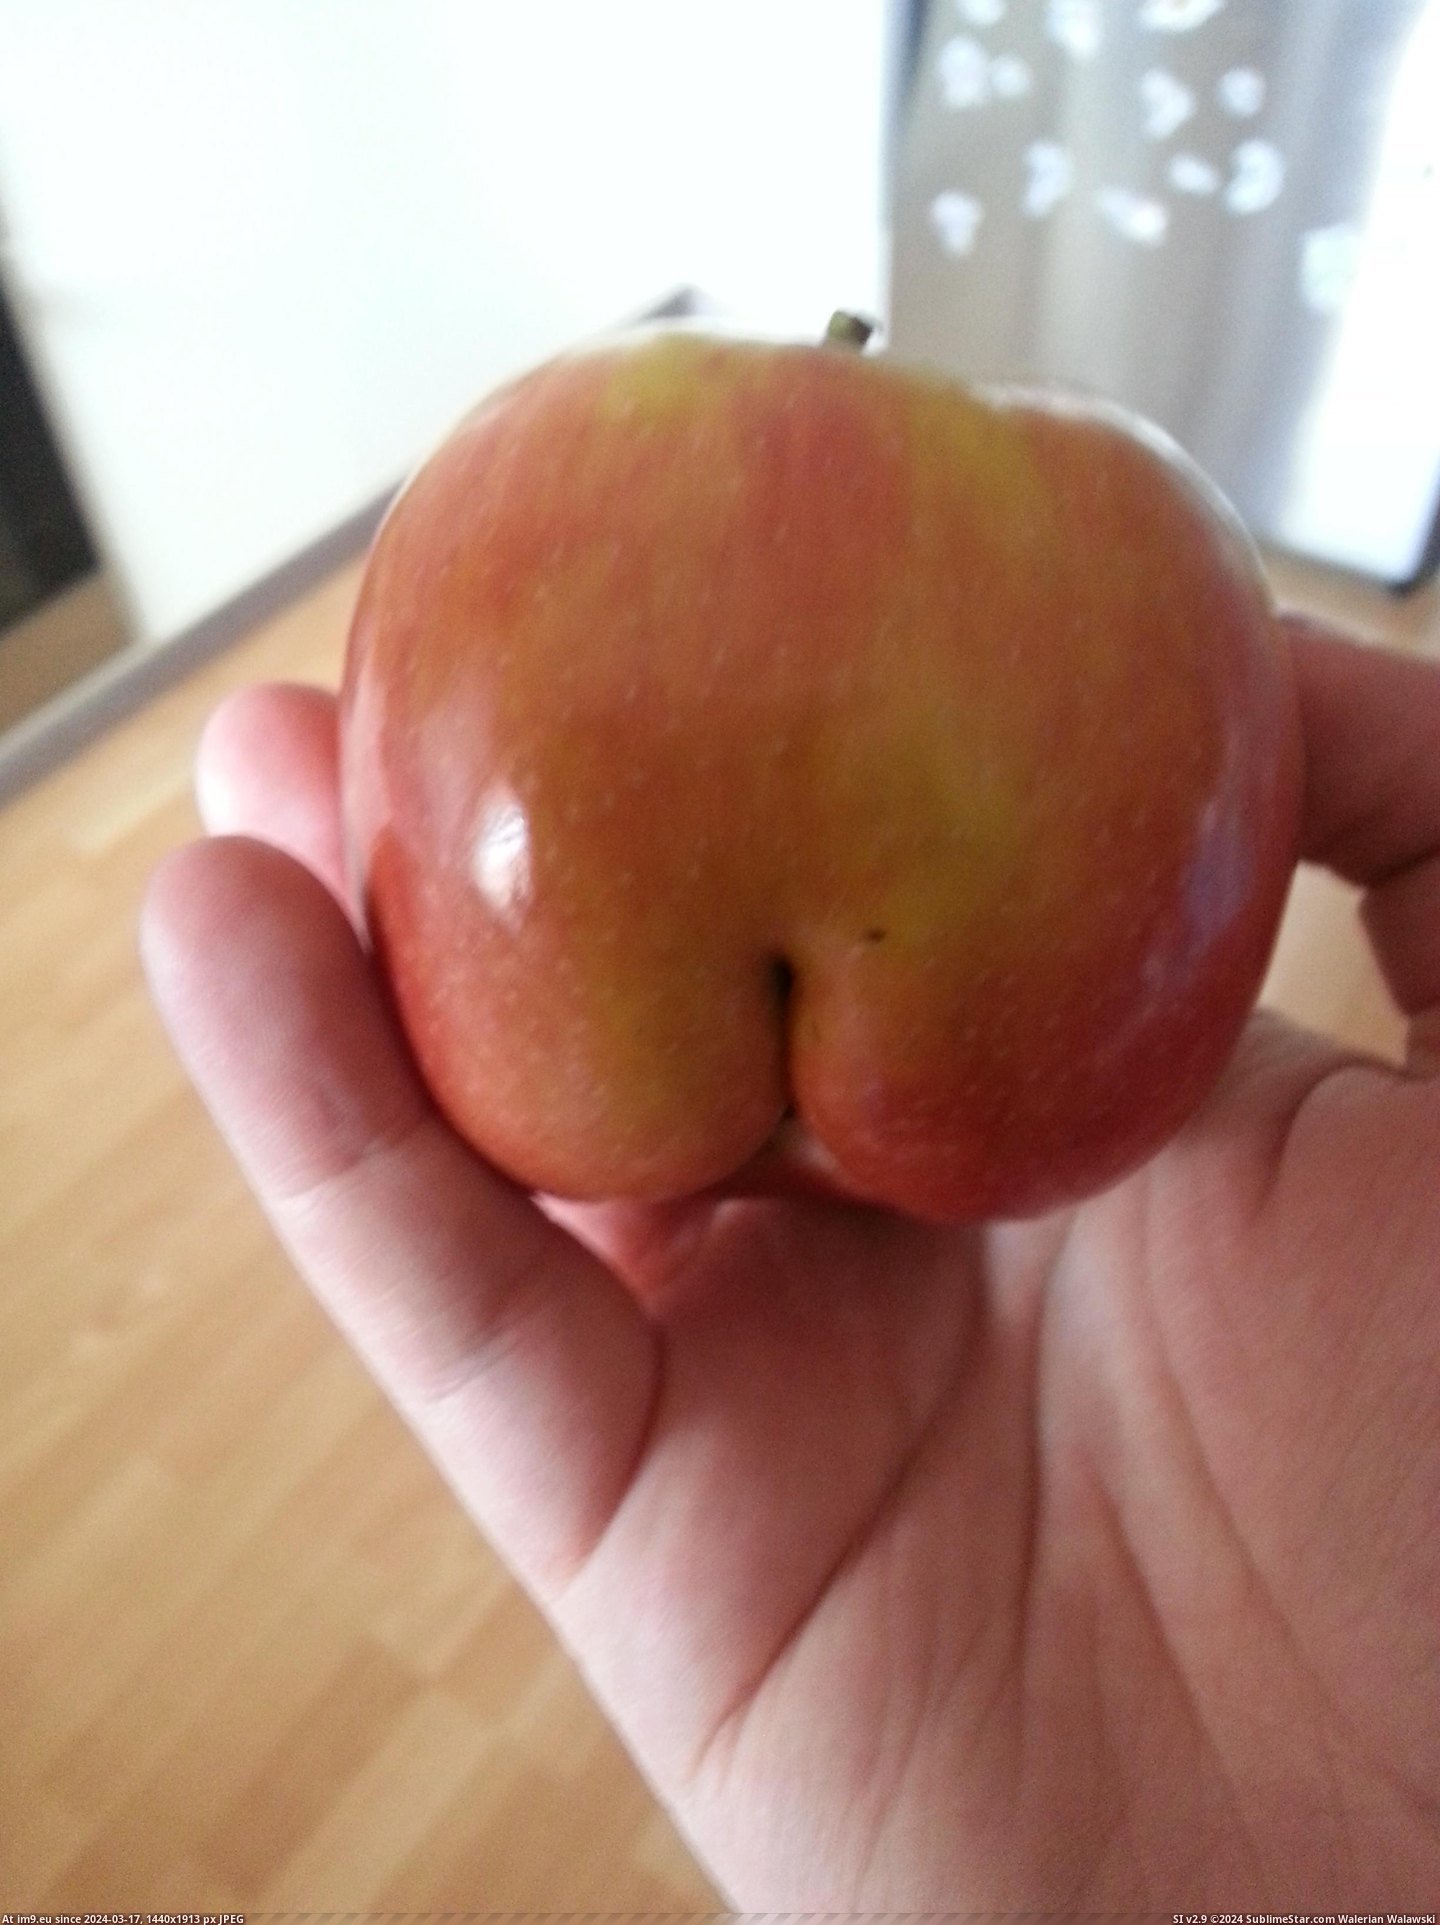 #Apple  #Bum [Mildlyinteresting] My apple has a bum Pic. (Изображение из альбом My r/MILDLYINTERESTING favs))